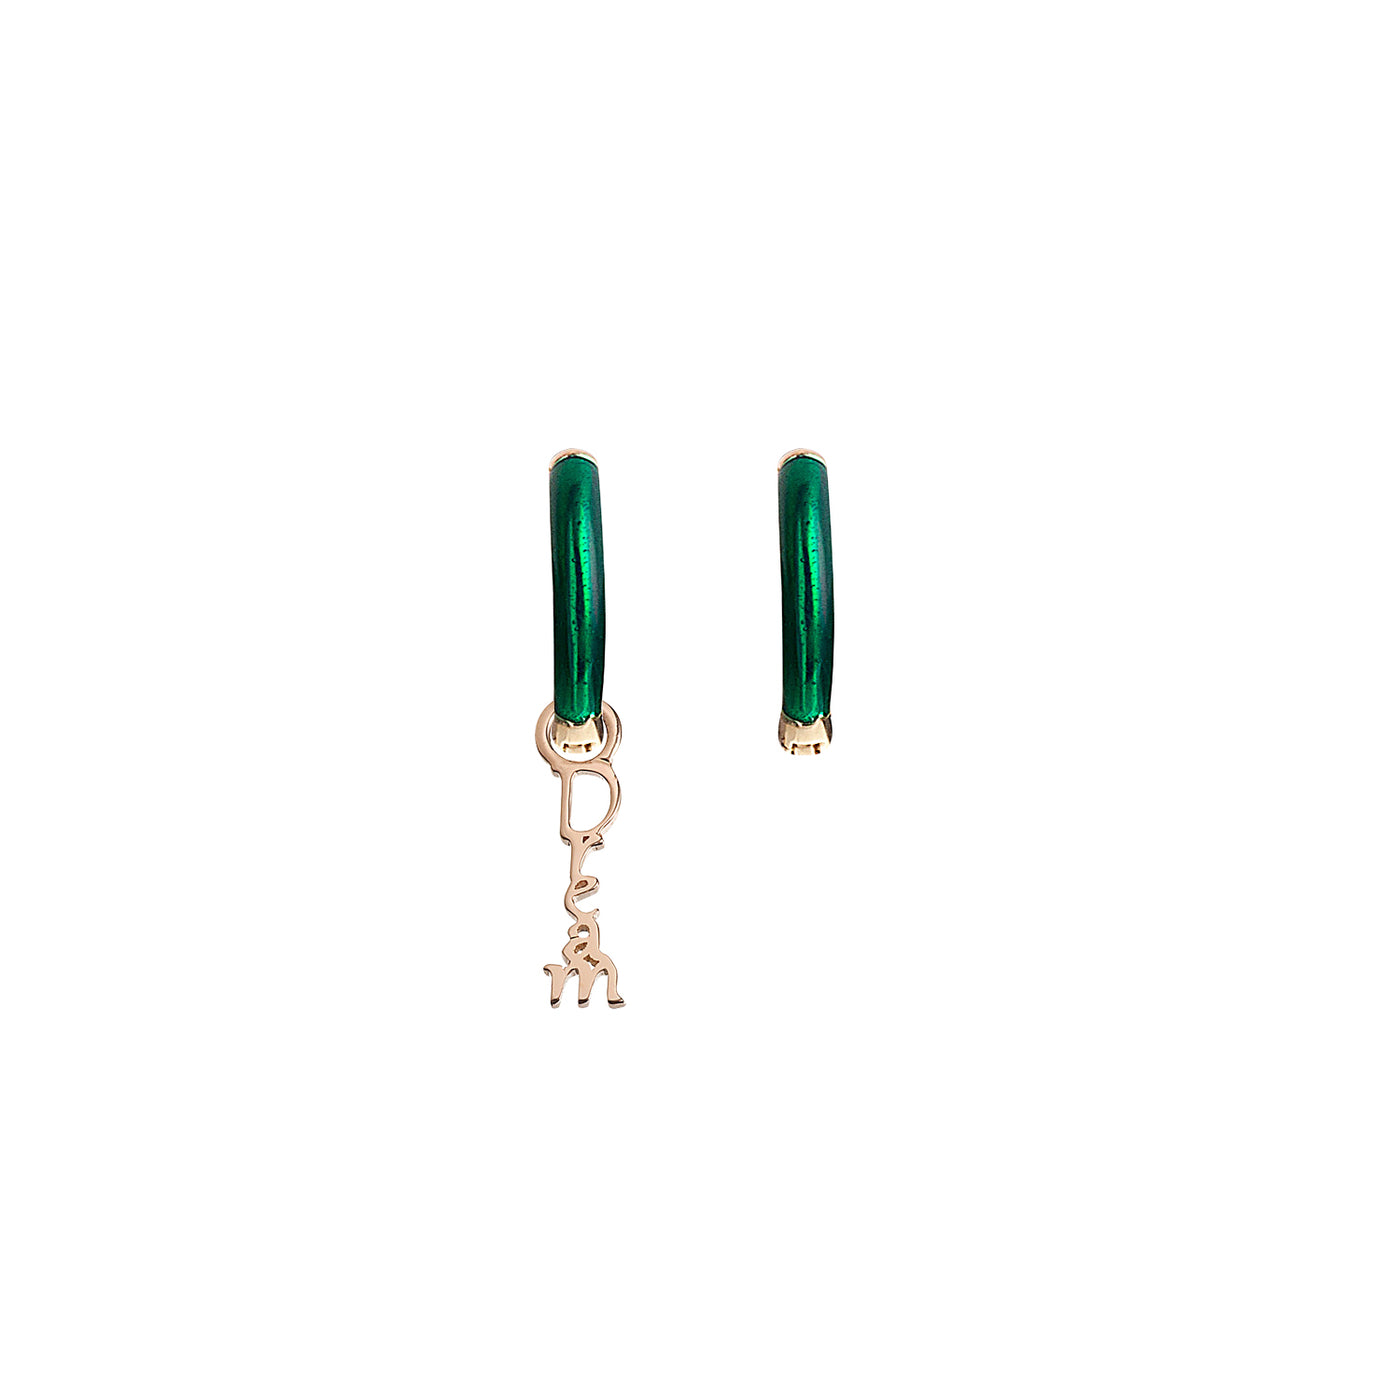 Green Enamel Hoop Earrings